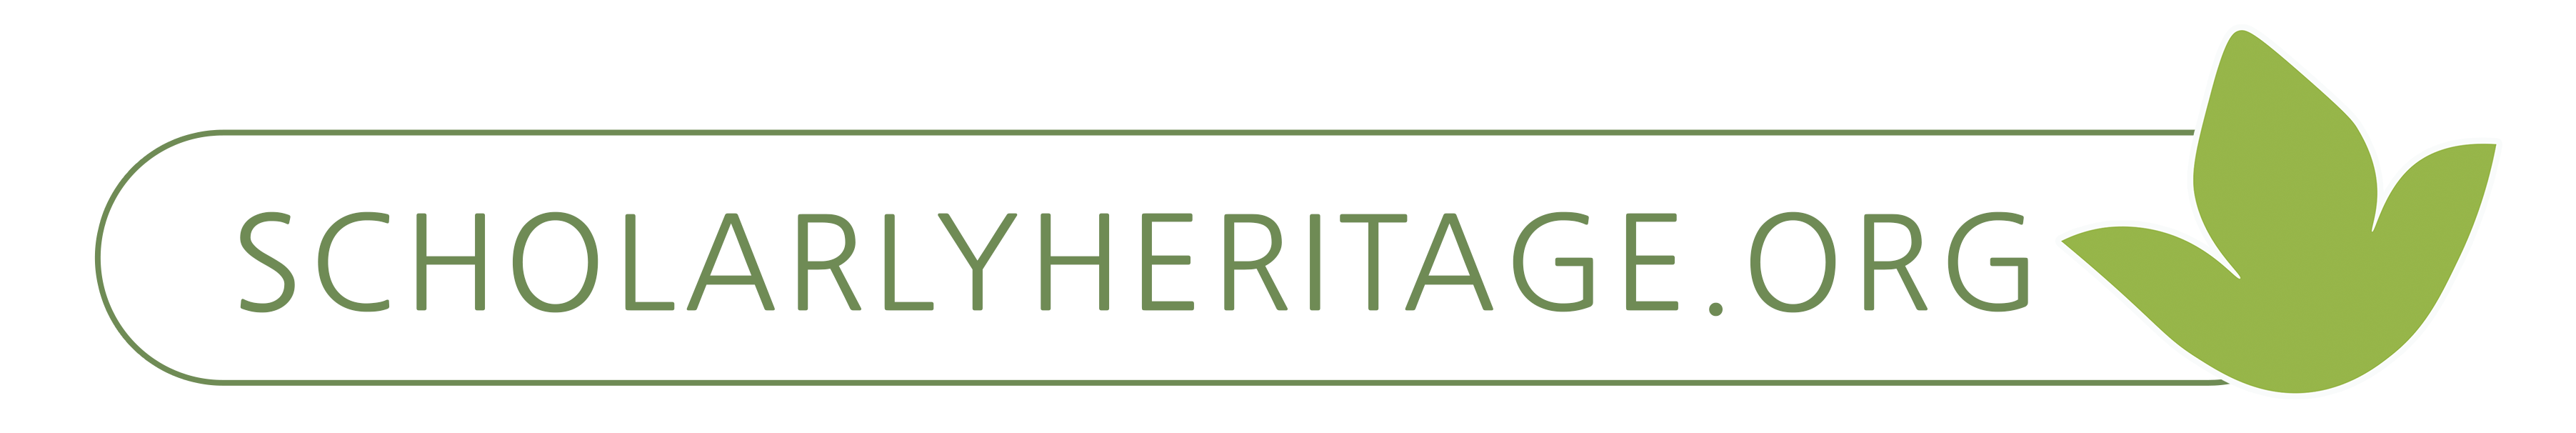 Scholarly Heritage logo